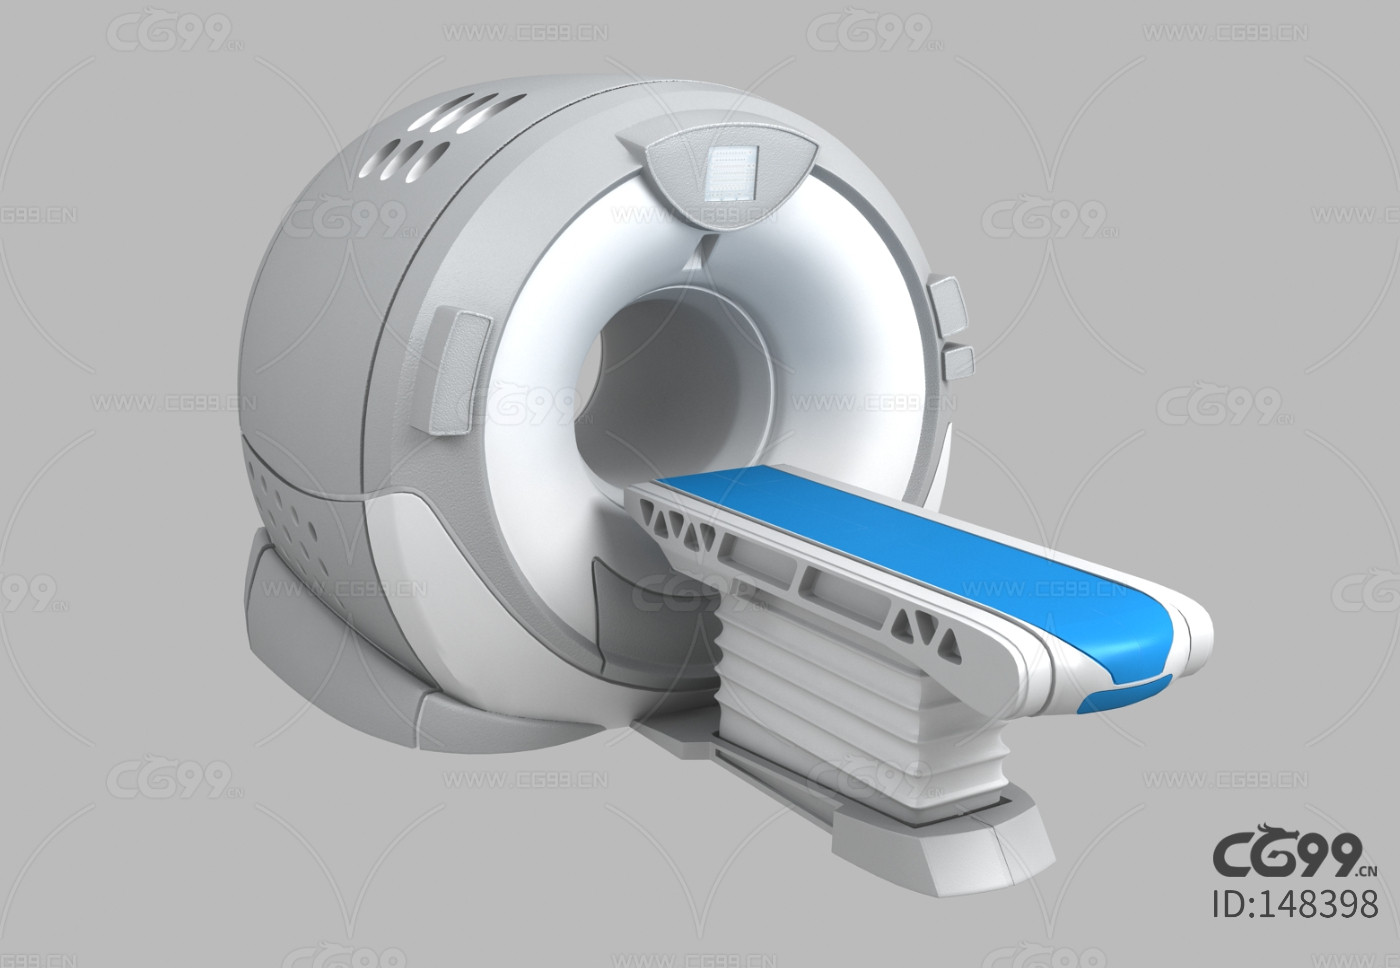 ct扫描 mri磁共振成像机 ct设备 医疗设备 医院仪器 核磁共振 高科技